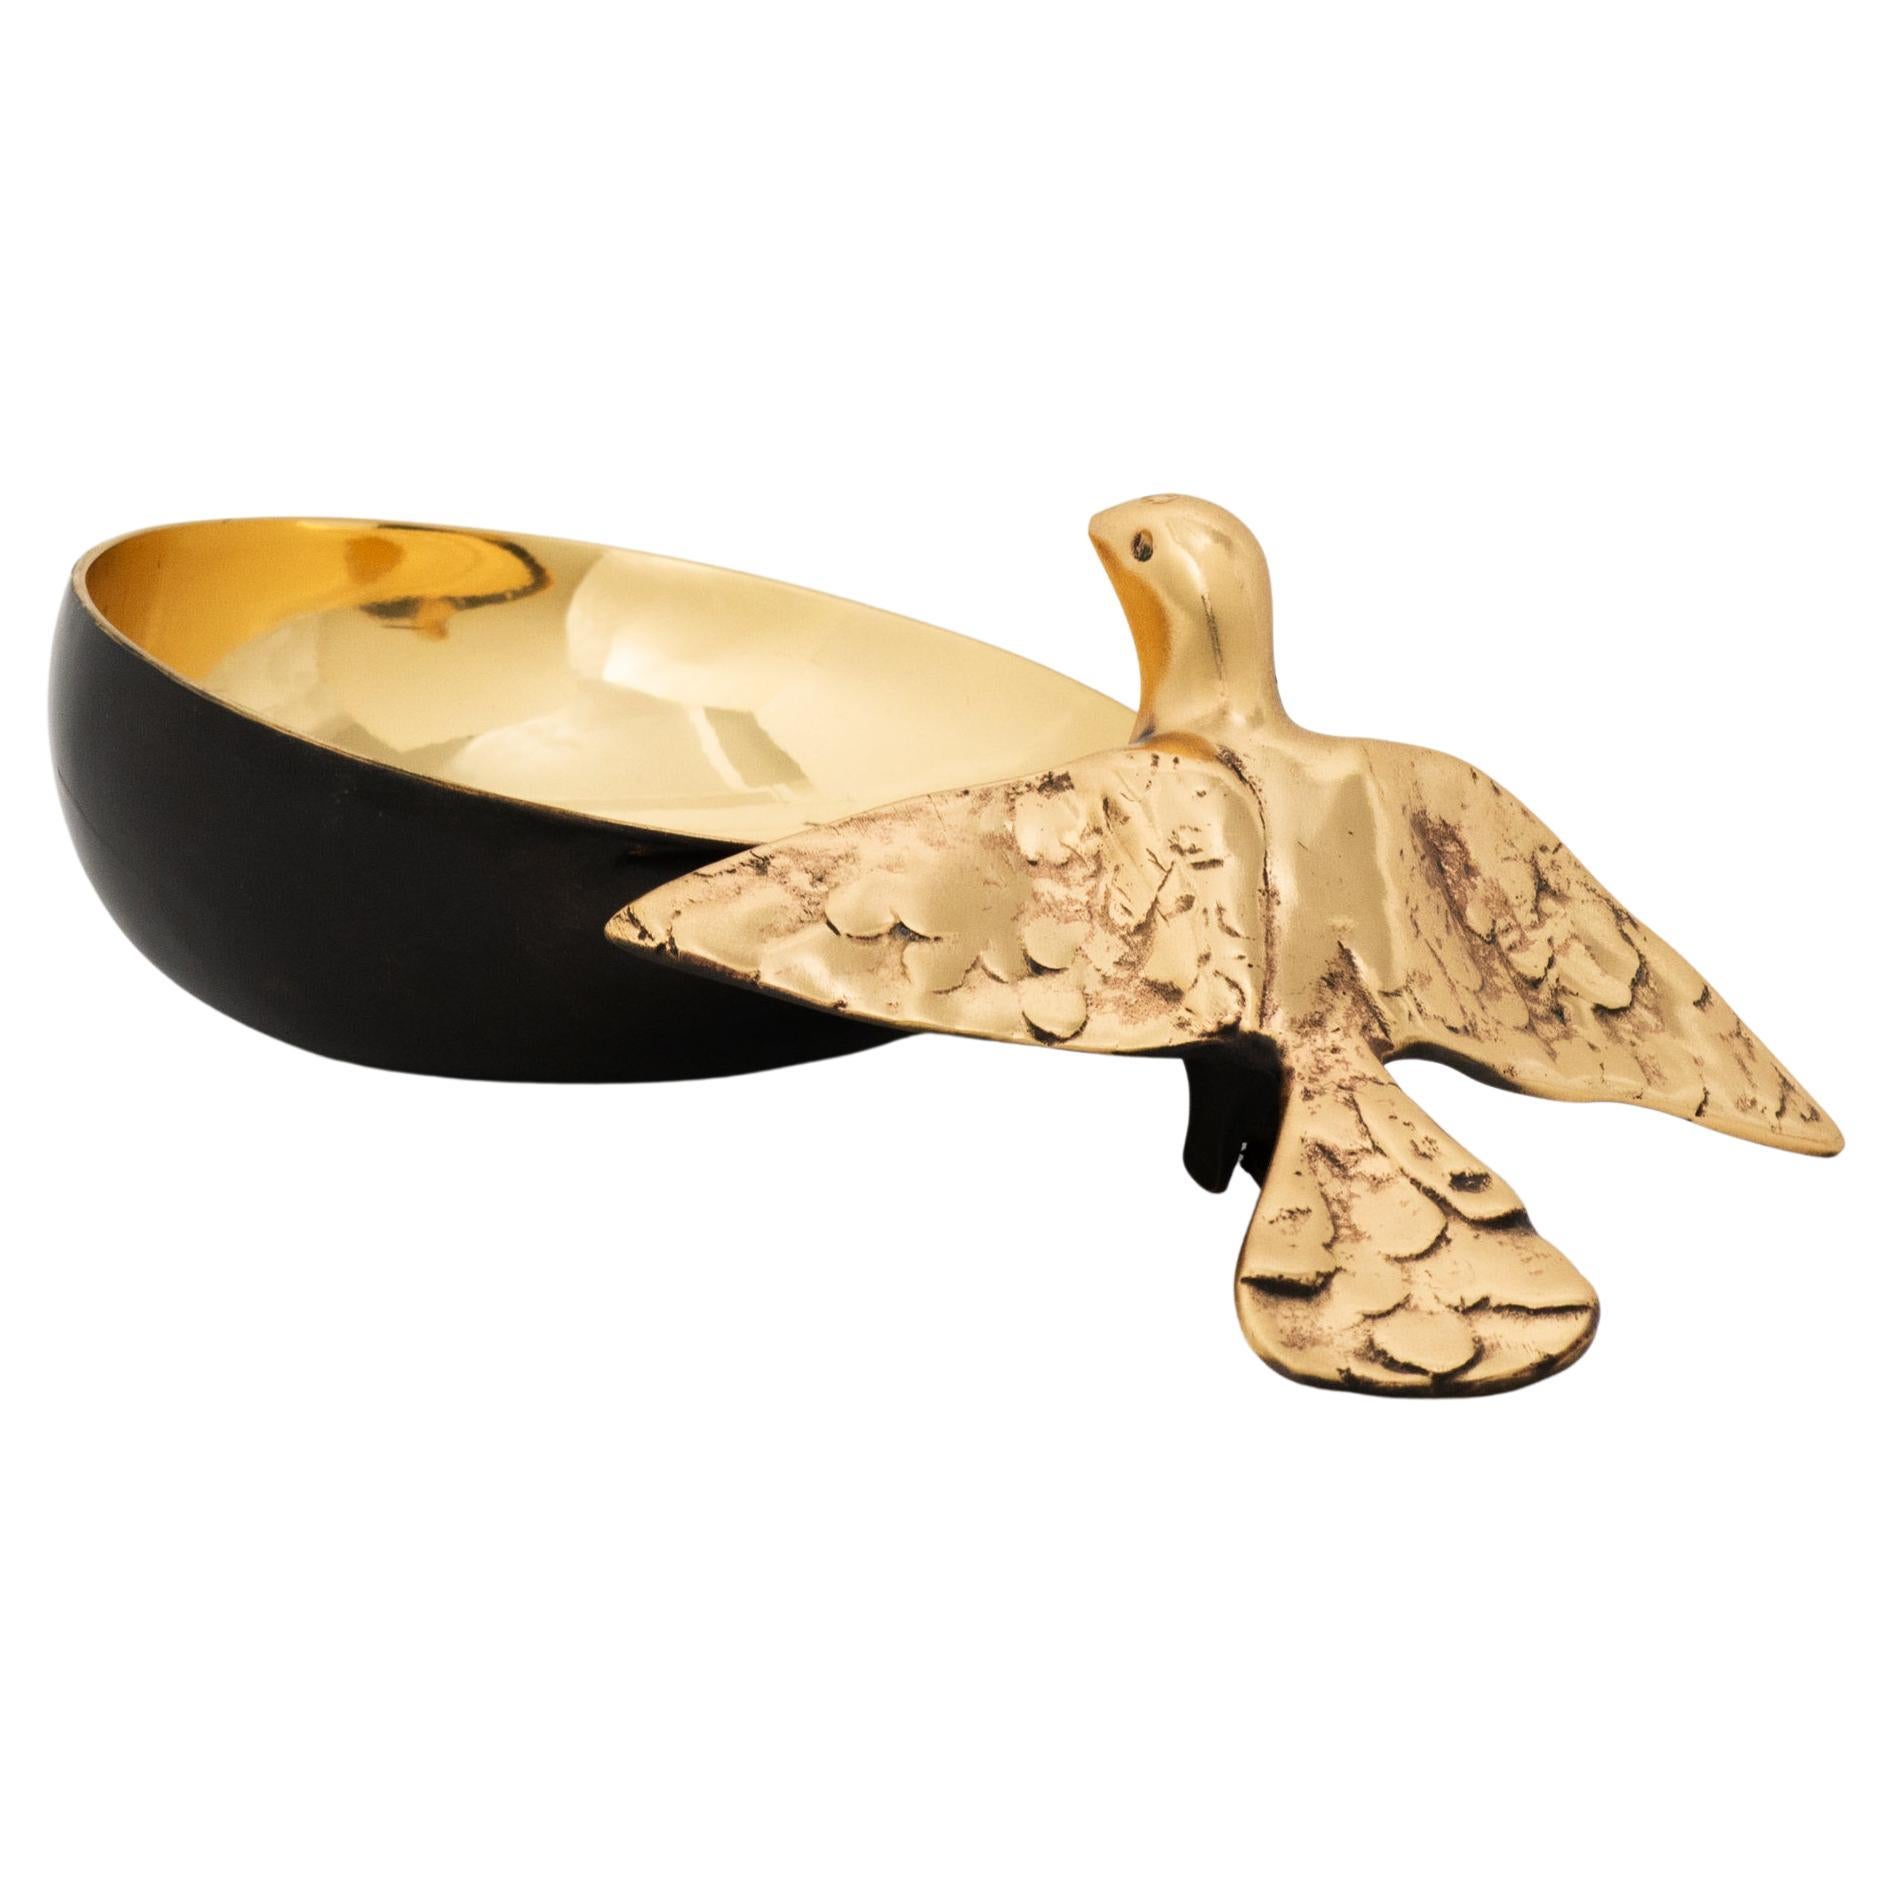 Handmade Cast Bronze Decorative Bowl with Bird